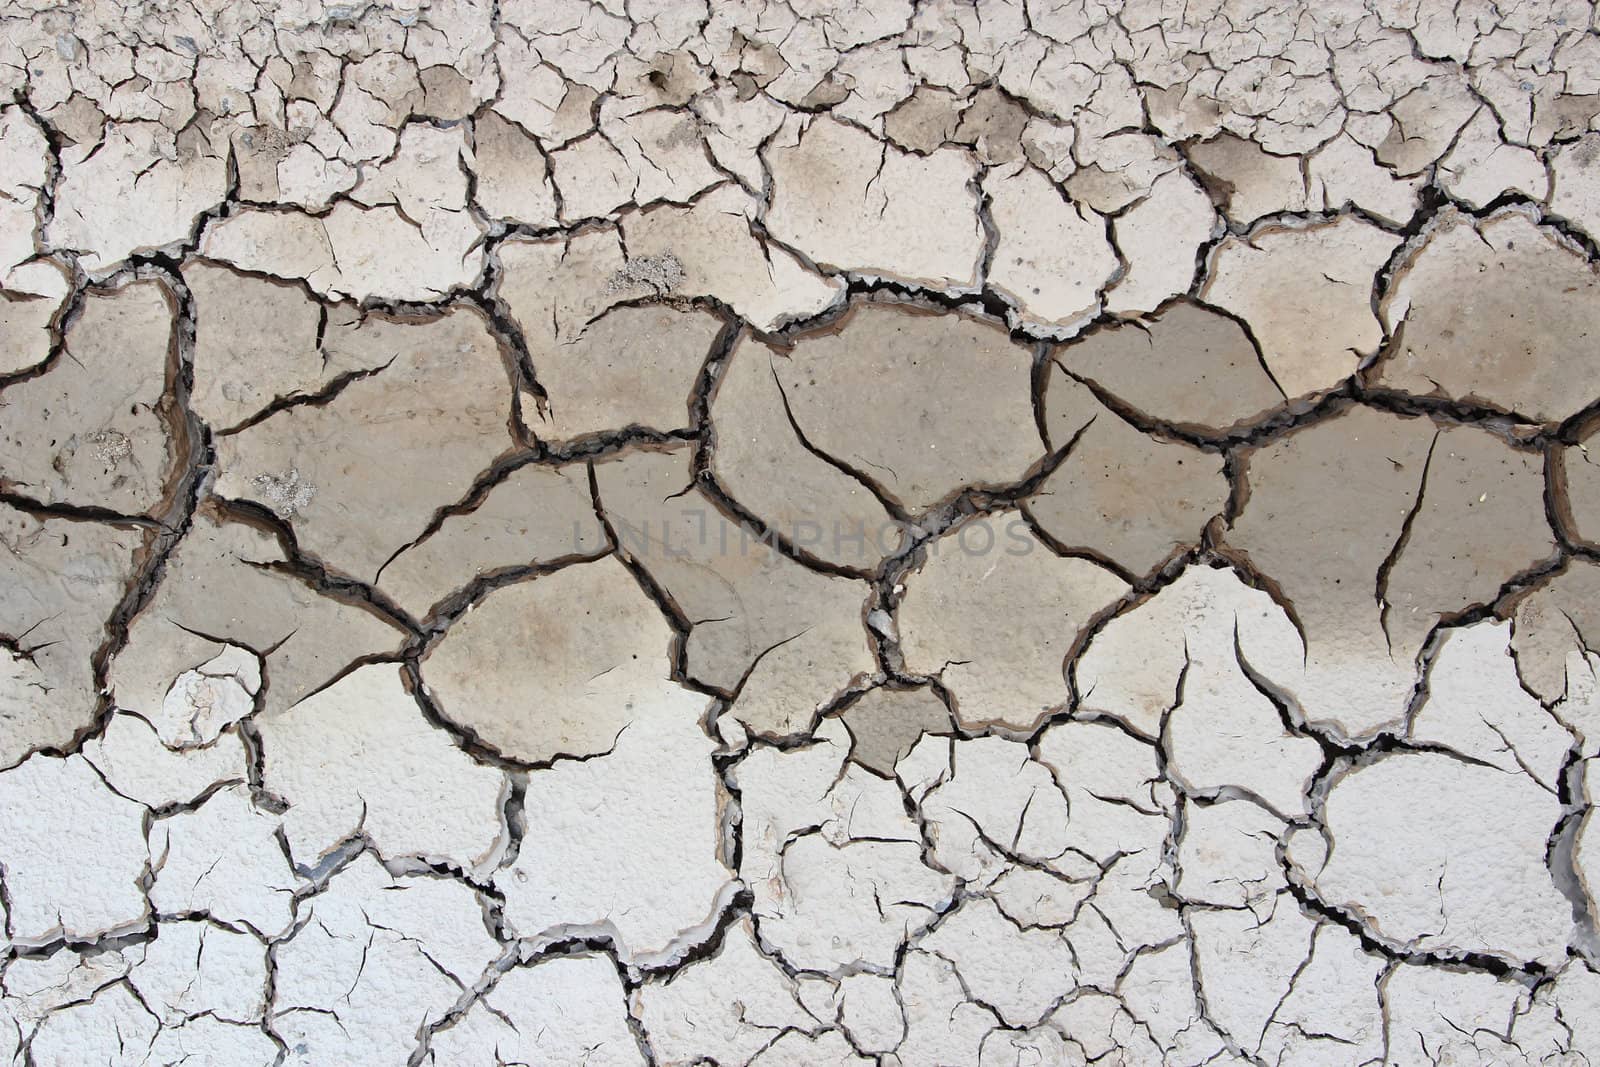 Crack soil on dry season, Global worming effect. by bajita111122